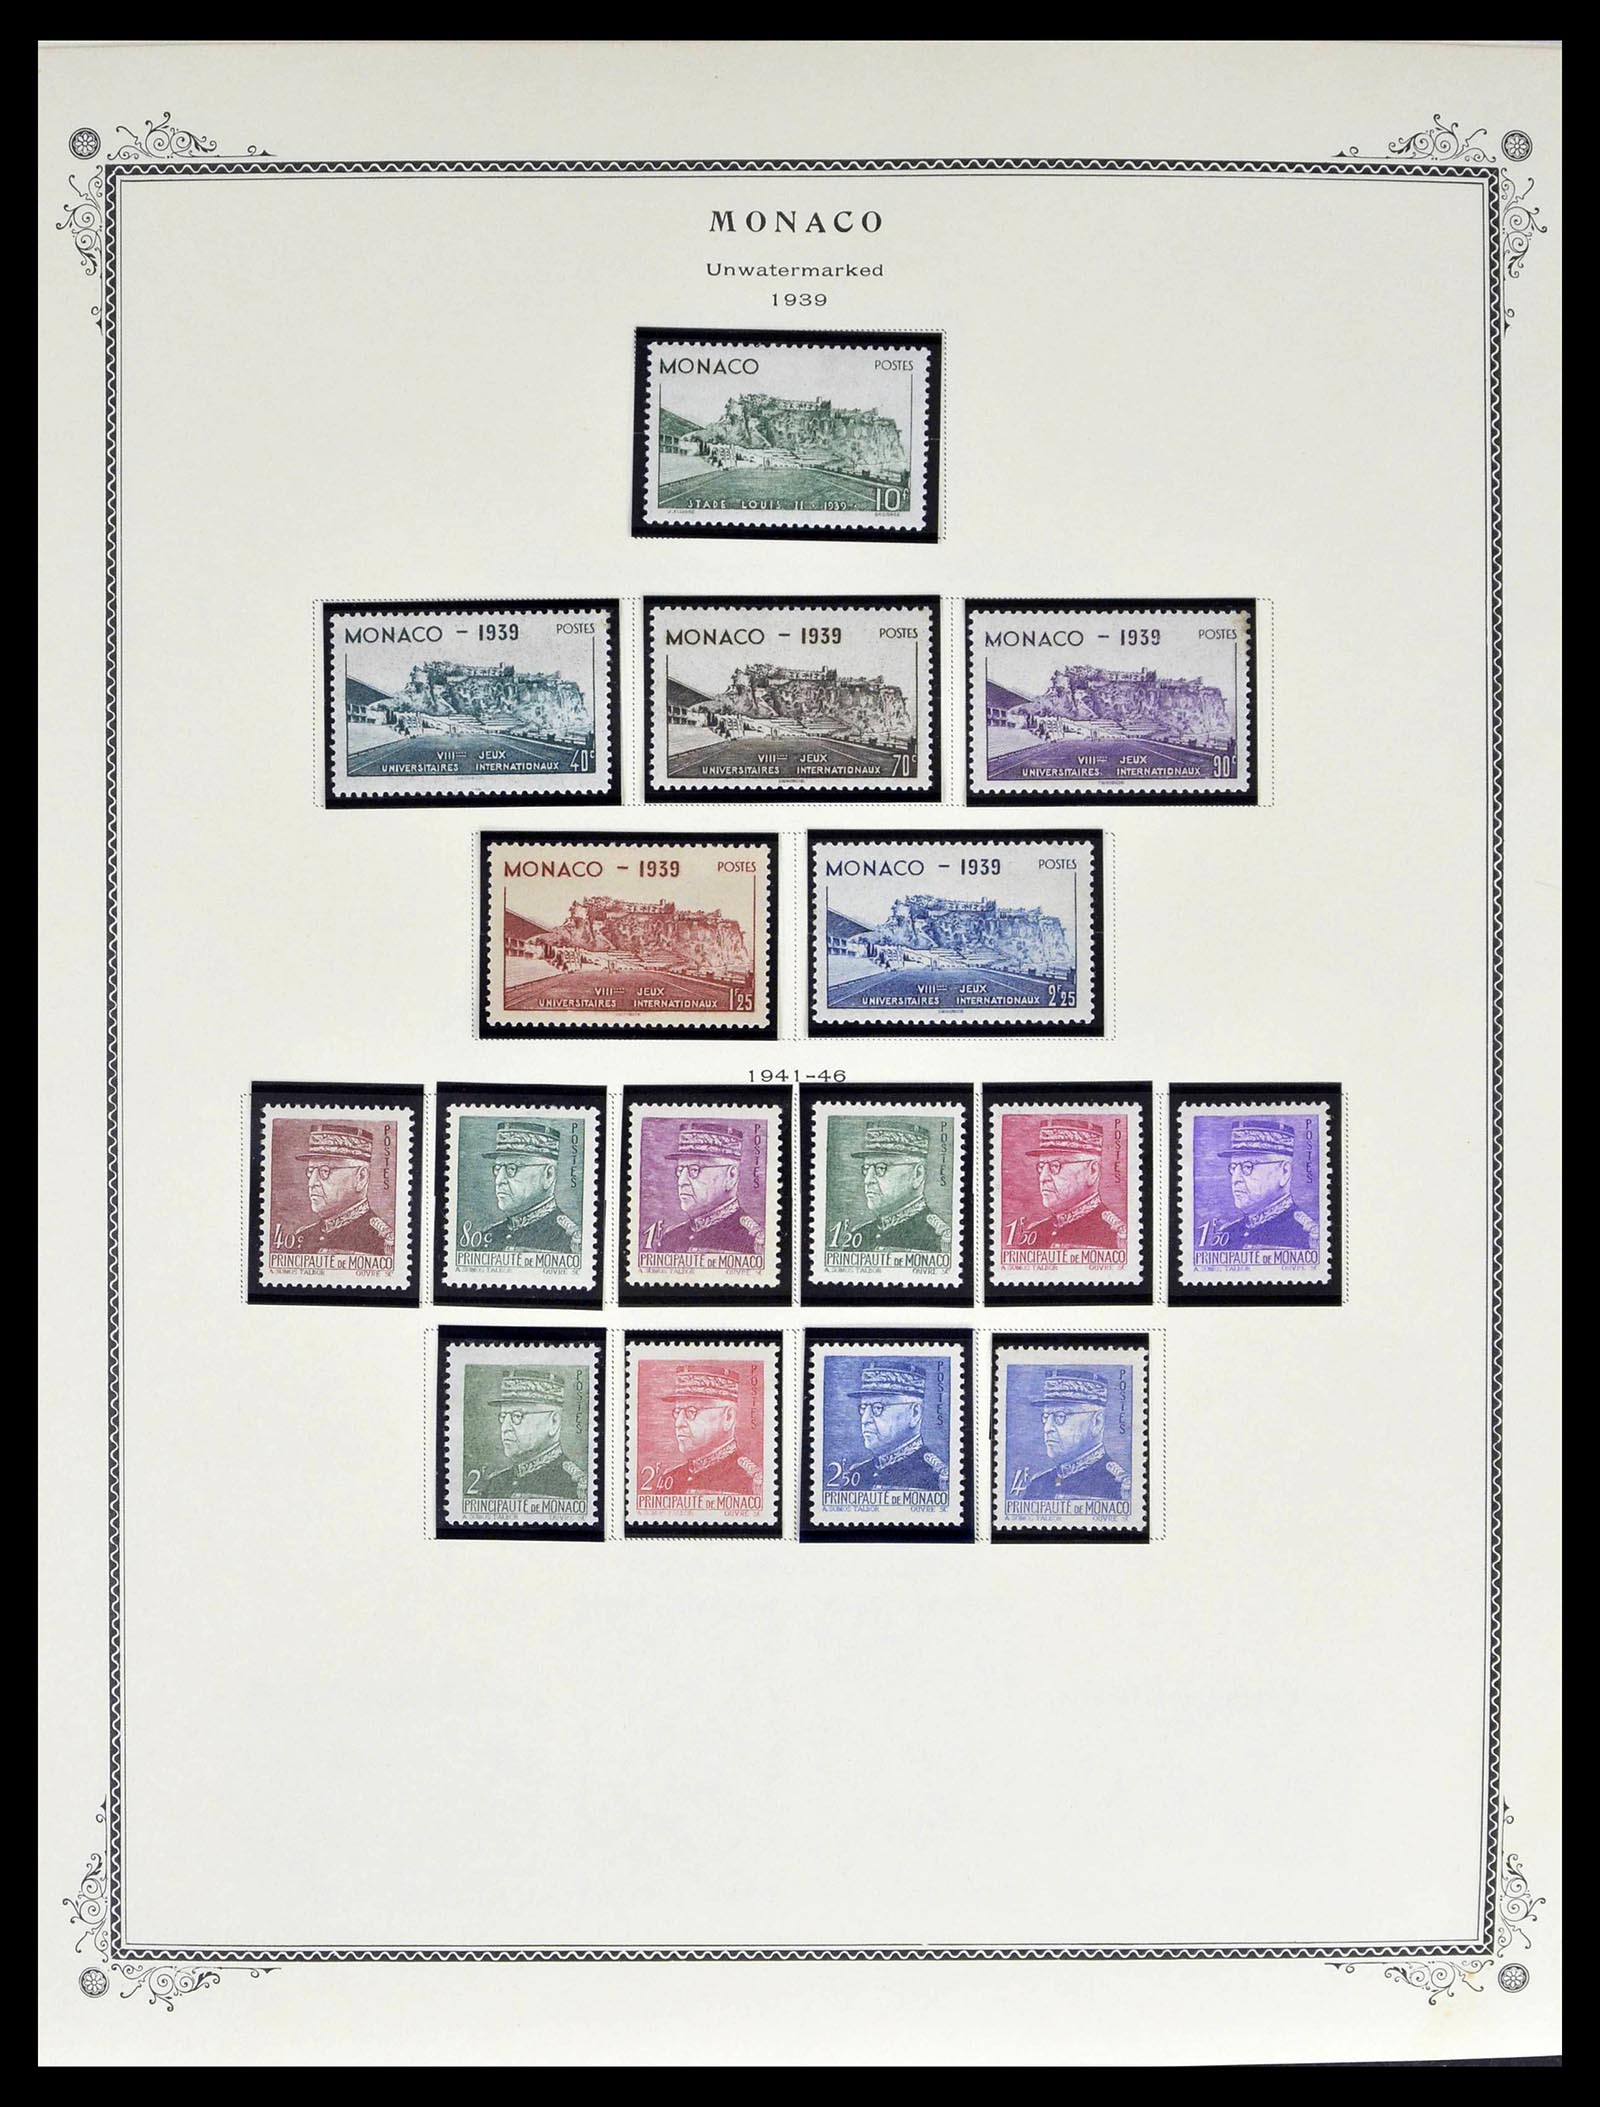 39181 0020 - Stamp collection 39181 Monaco 1885-1980.